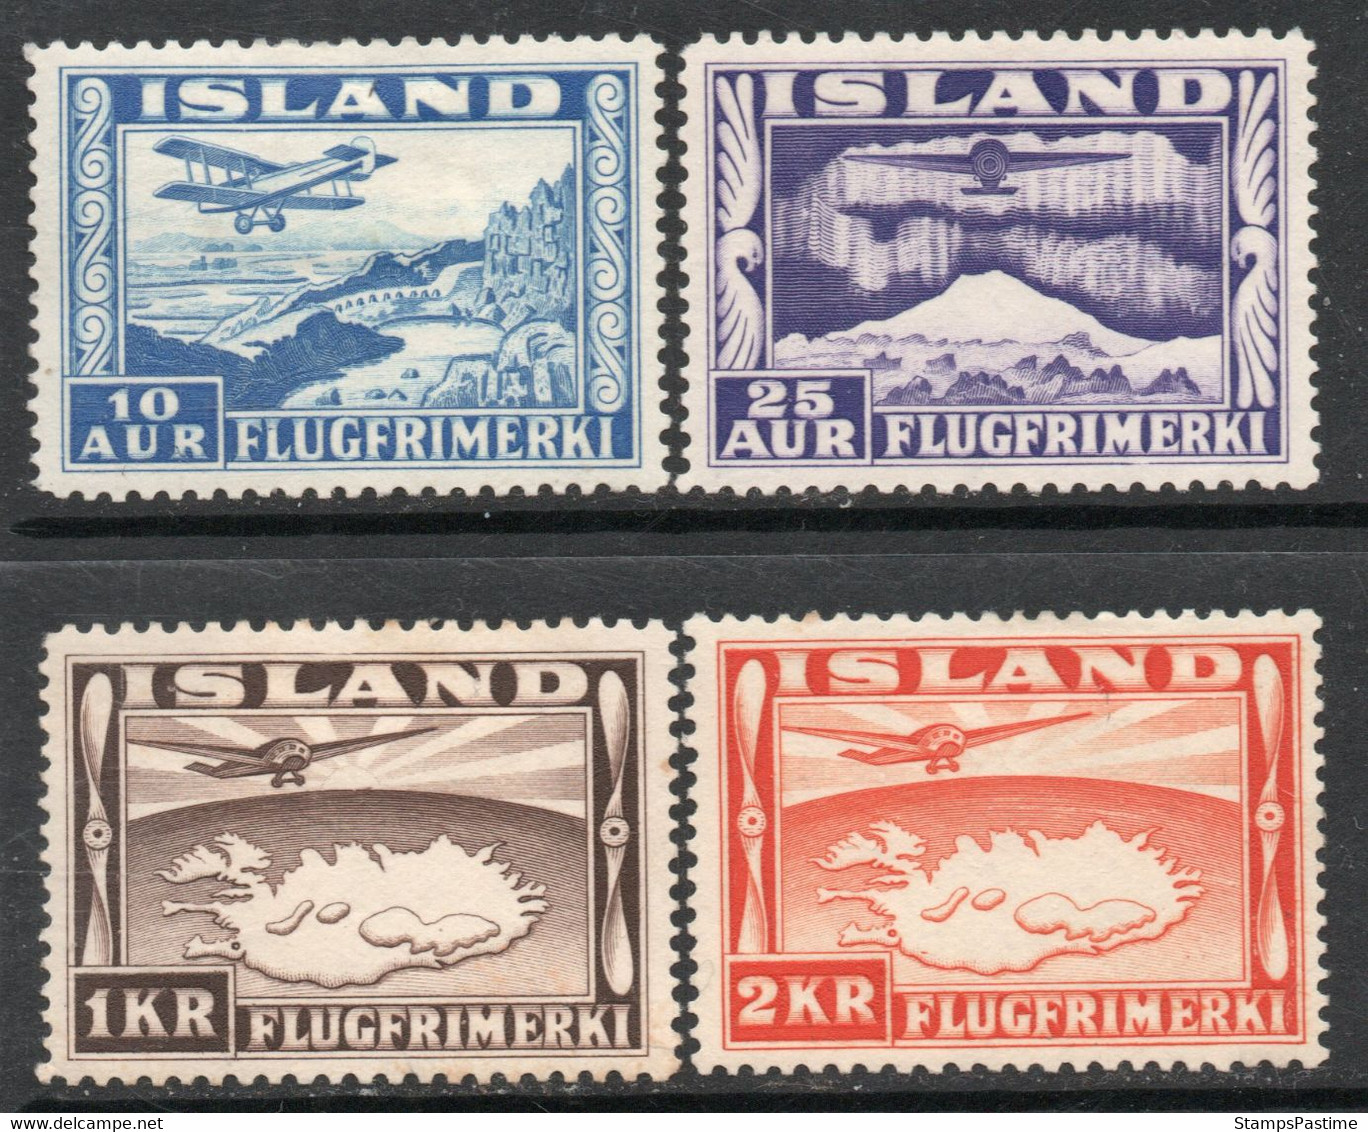 ISLANDIA – ICELAND Serie X 4 Sellos Aéreos Nuevos AVIÓN SOBRE LAGO, AURORA BOREAL Año 1934 – Valorizada En € 47,50 - Luftpost